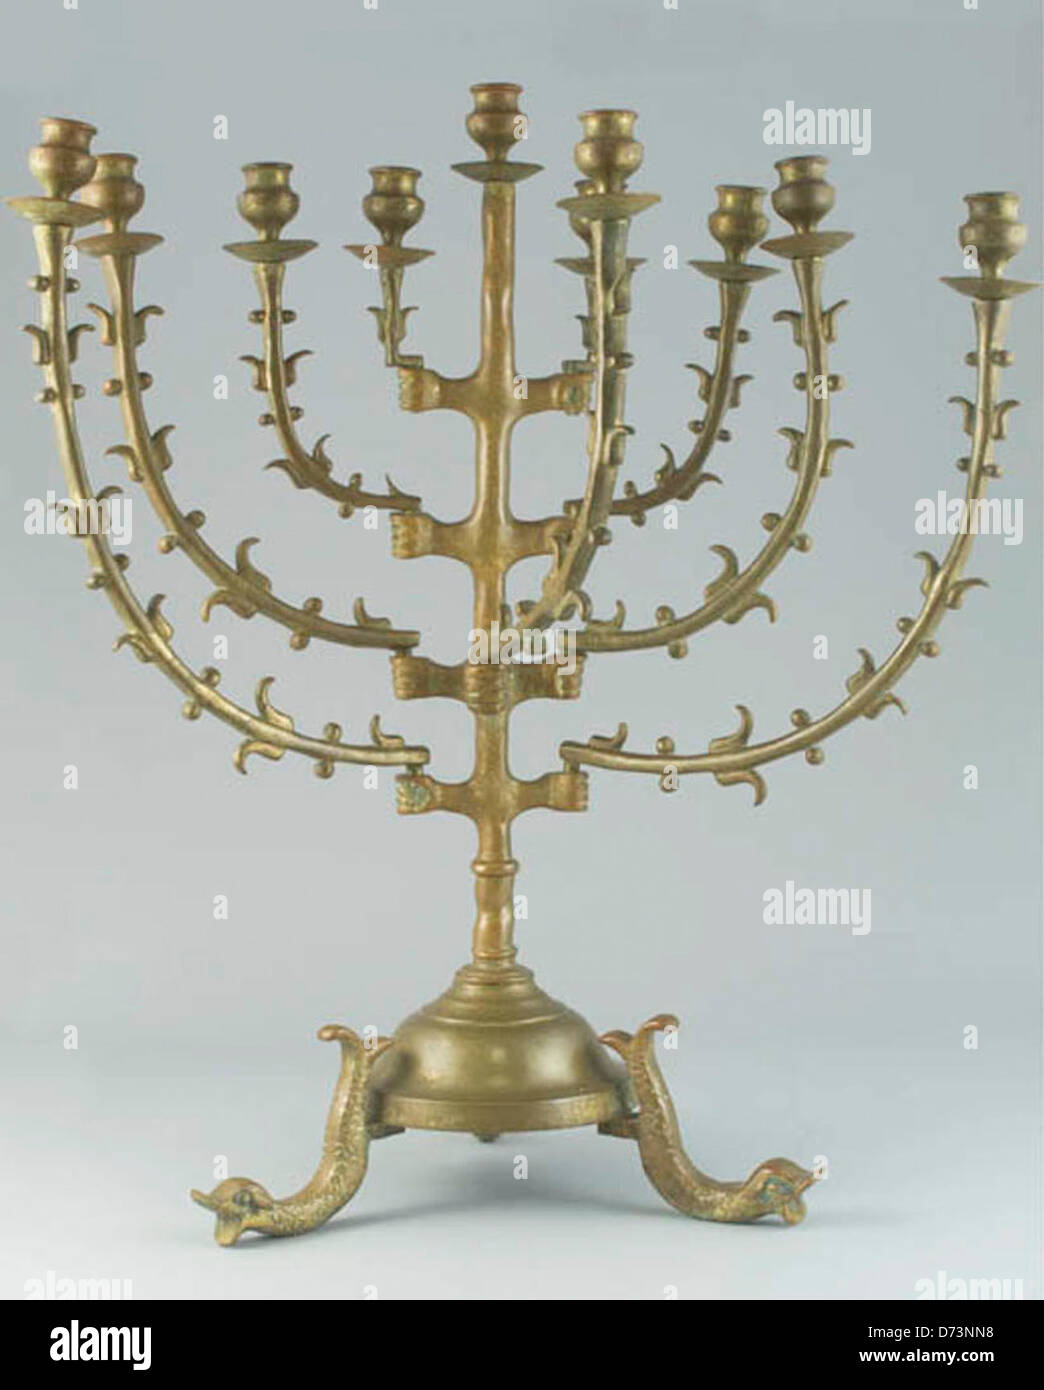 Lampada di Hanukkah Foto stock - Alamy